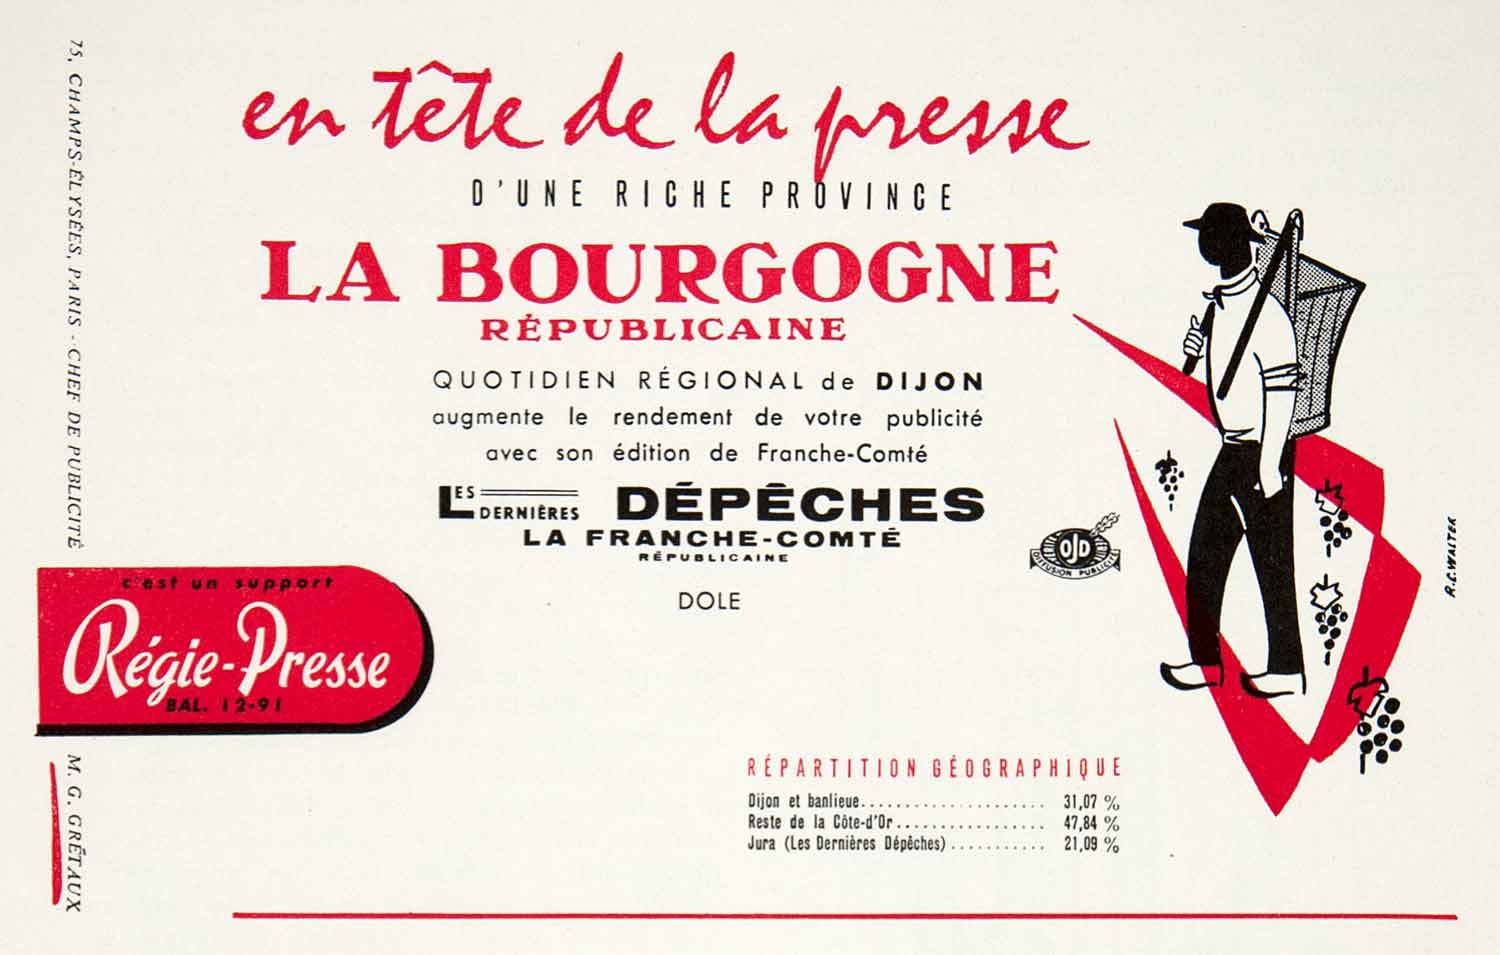 1955 Ad La Bourgogne Republicaine Regie-Presse Gretaux French R C Walter VEN2